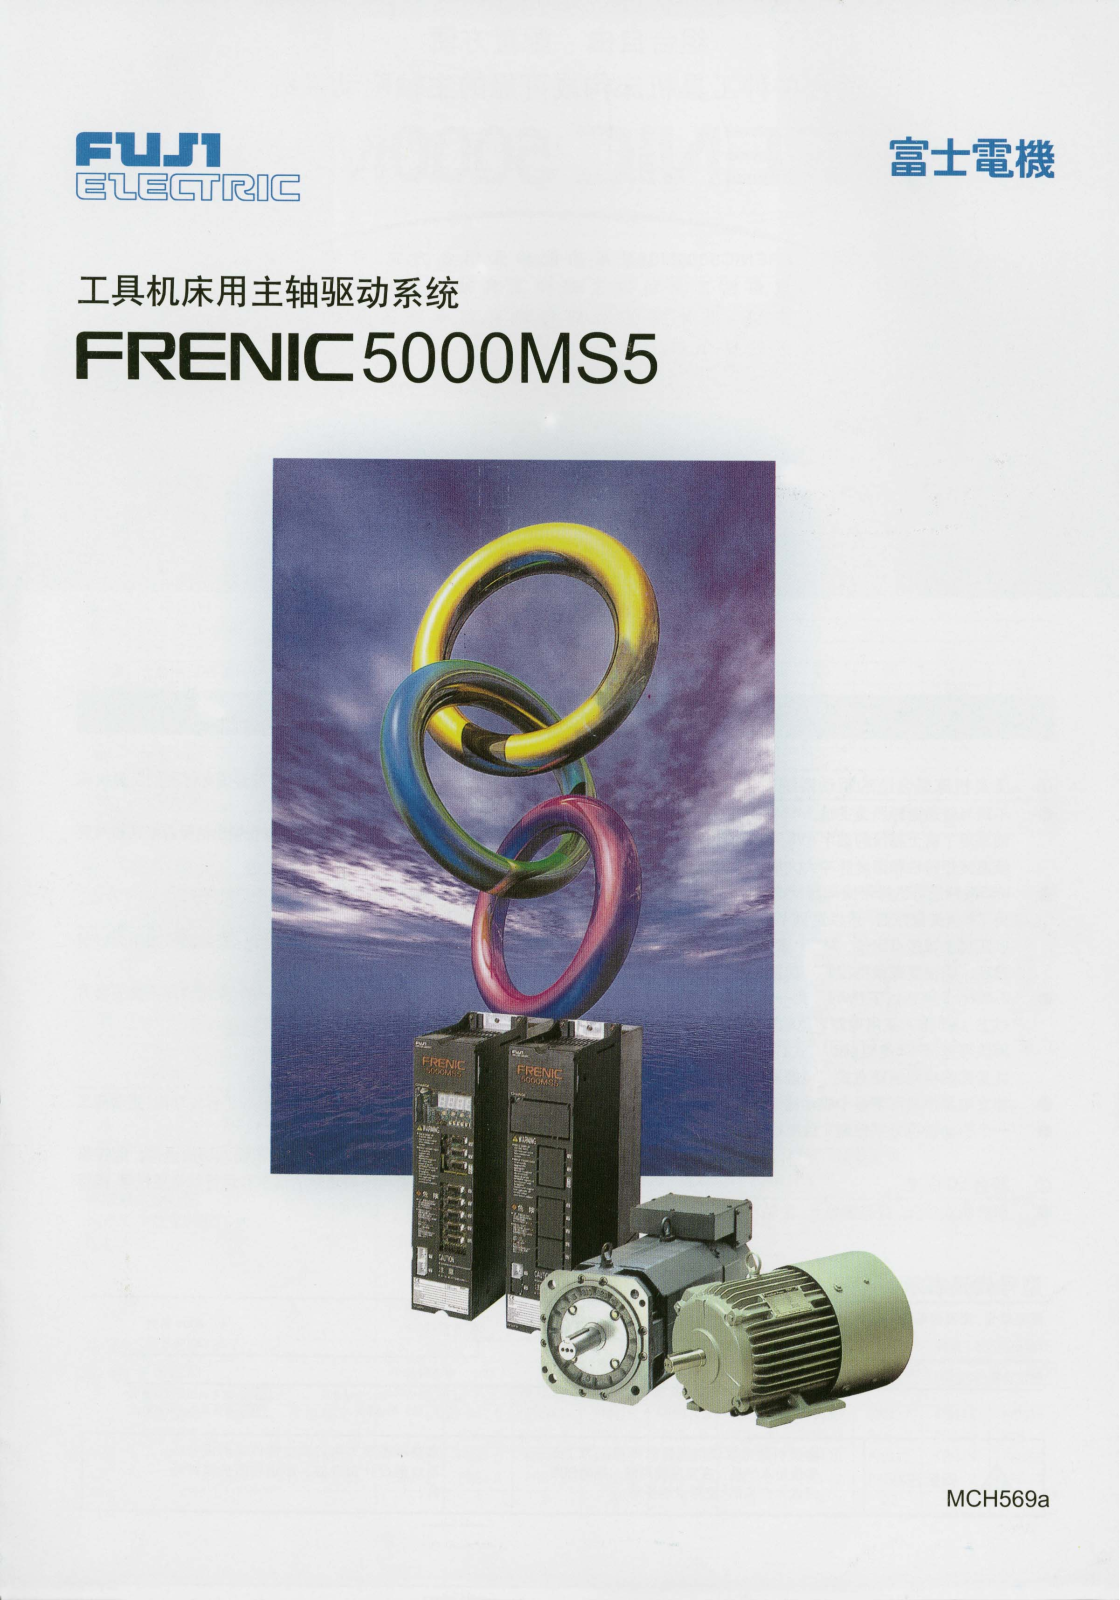 Fuji Electric FRENIC 5000MS5 Service Manual